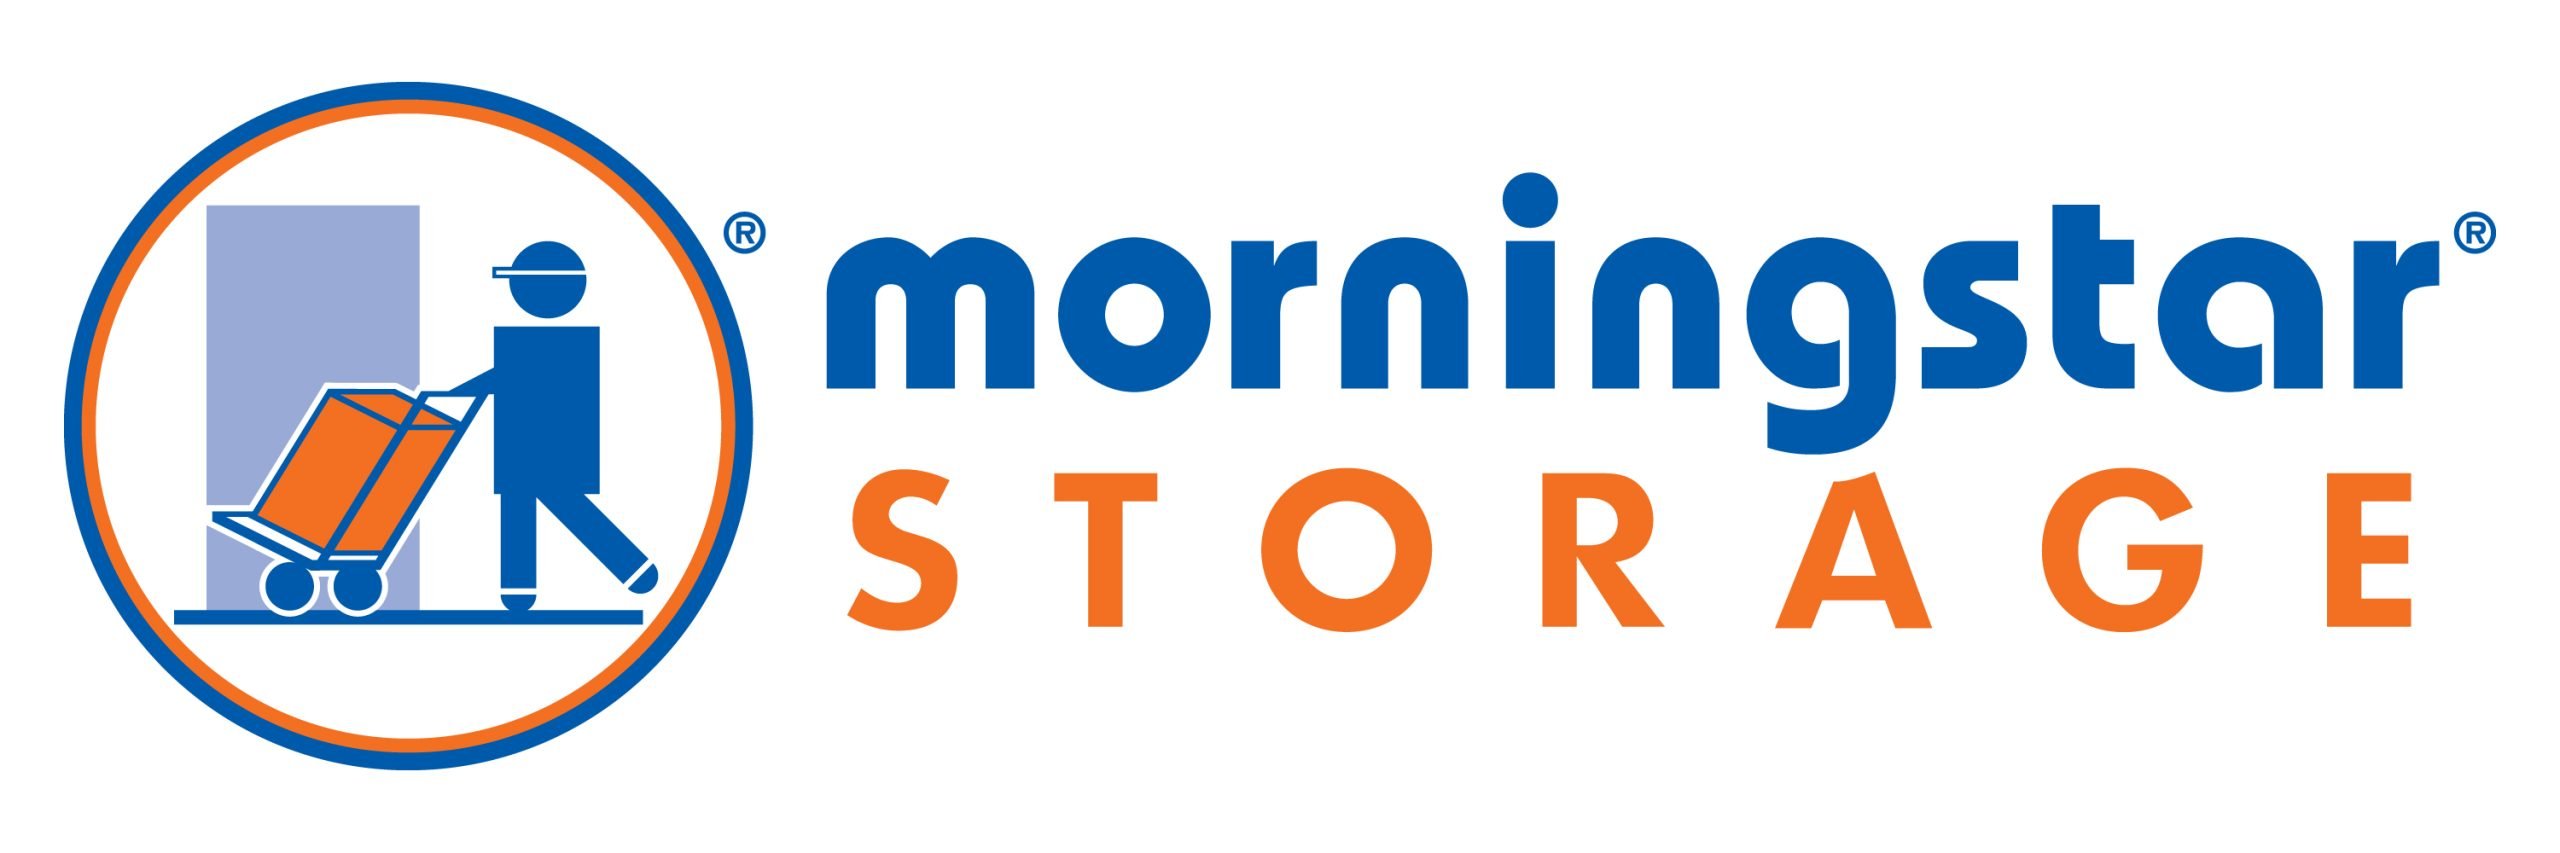 Morningstar Storage